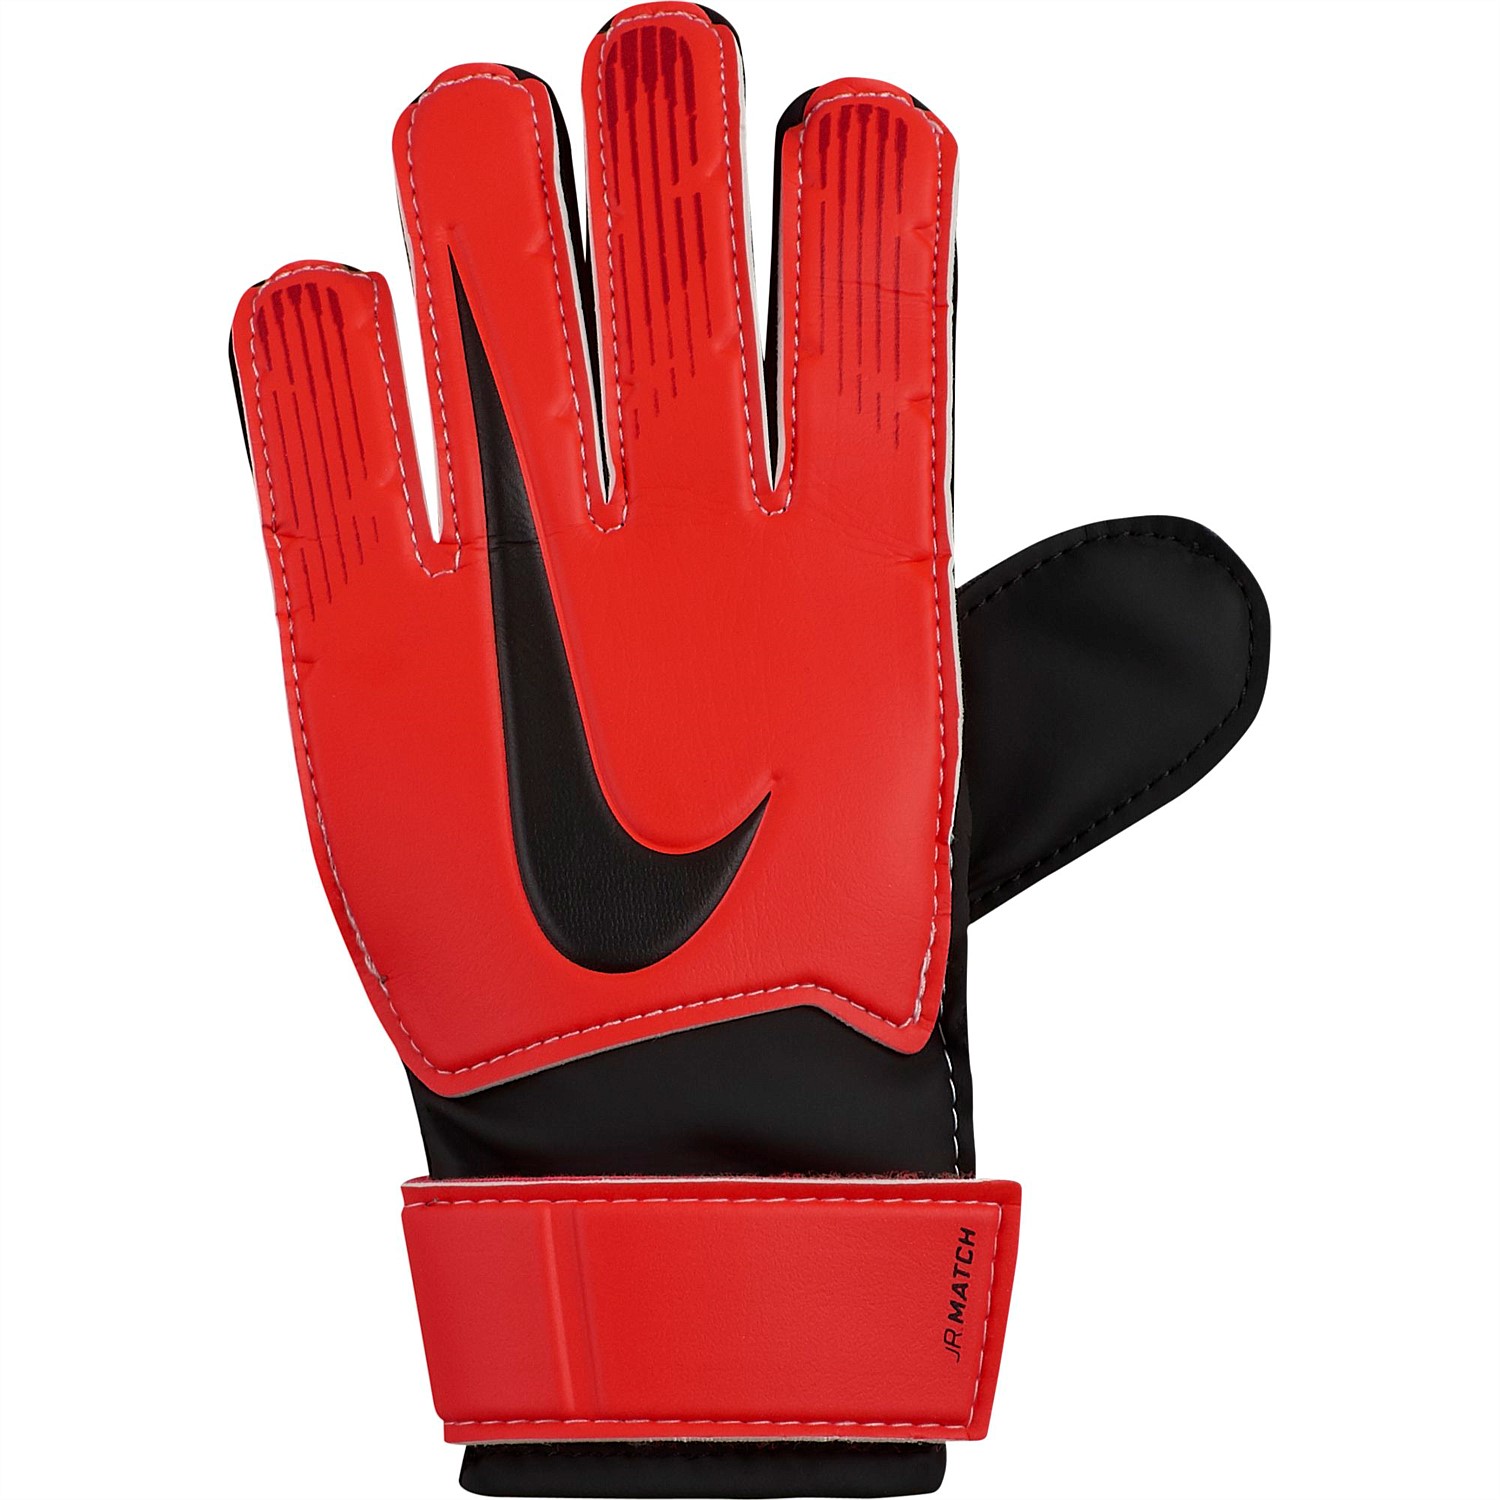 Football | Football Supporter Gear, Footwear and Accessories Online |  Stirling Sports - Junior Match Goalkeeper Gloves